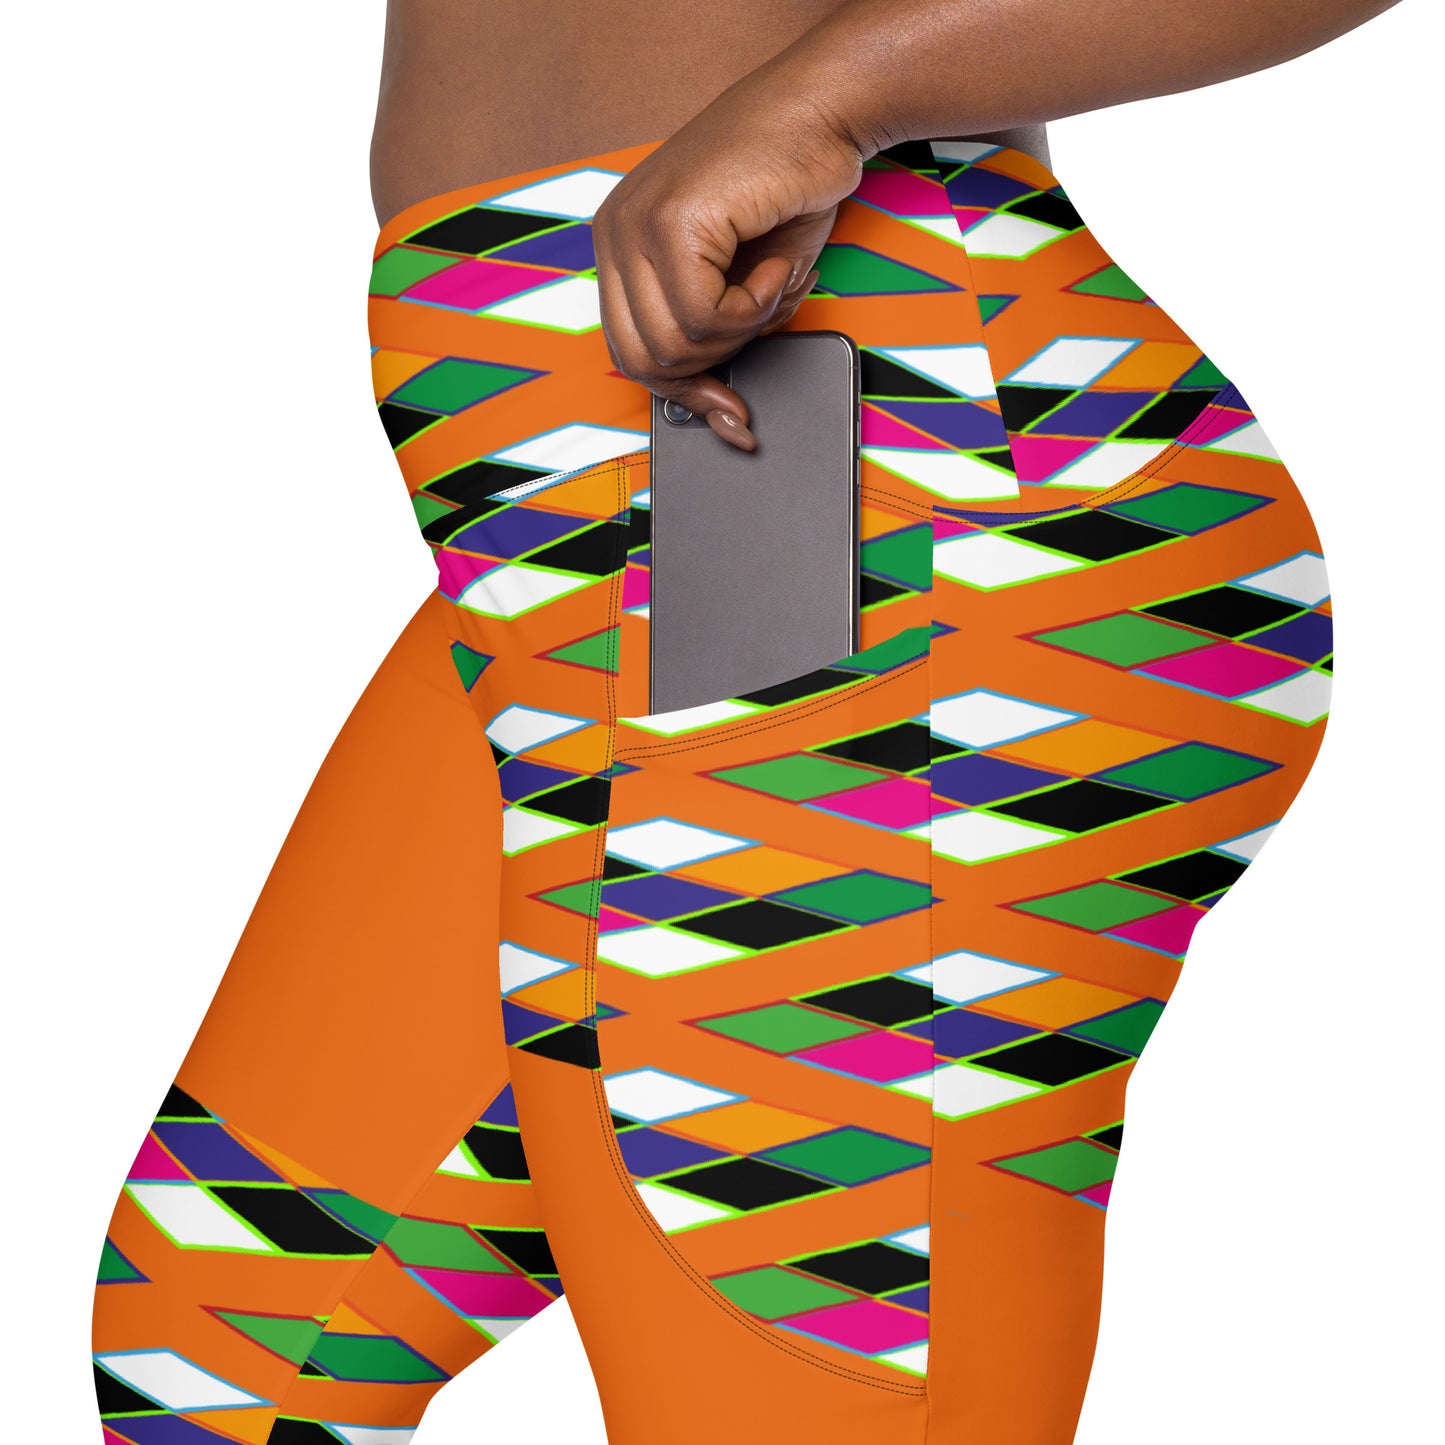 Orange Pyramid Print Leggings with pockets